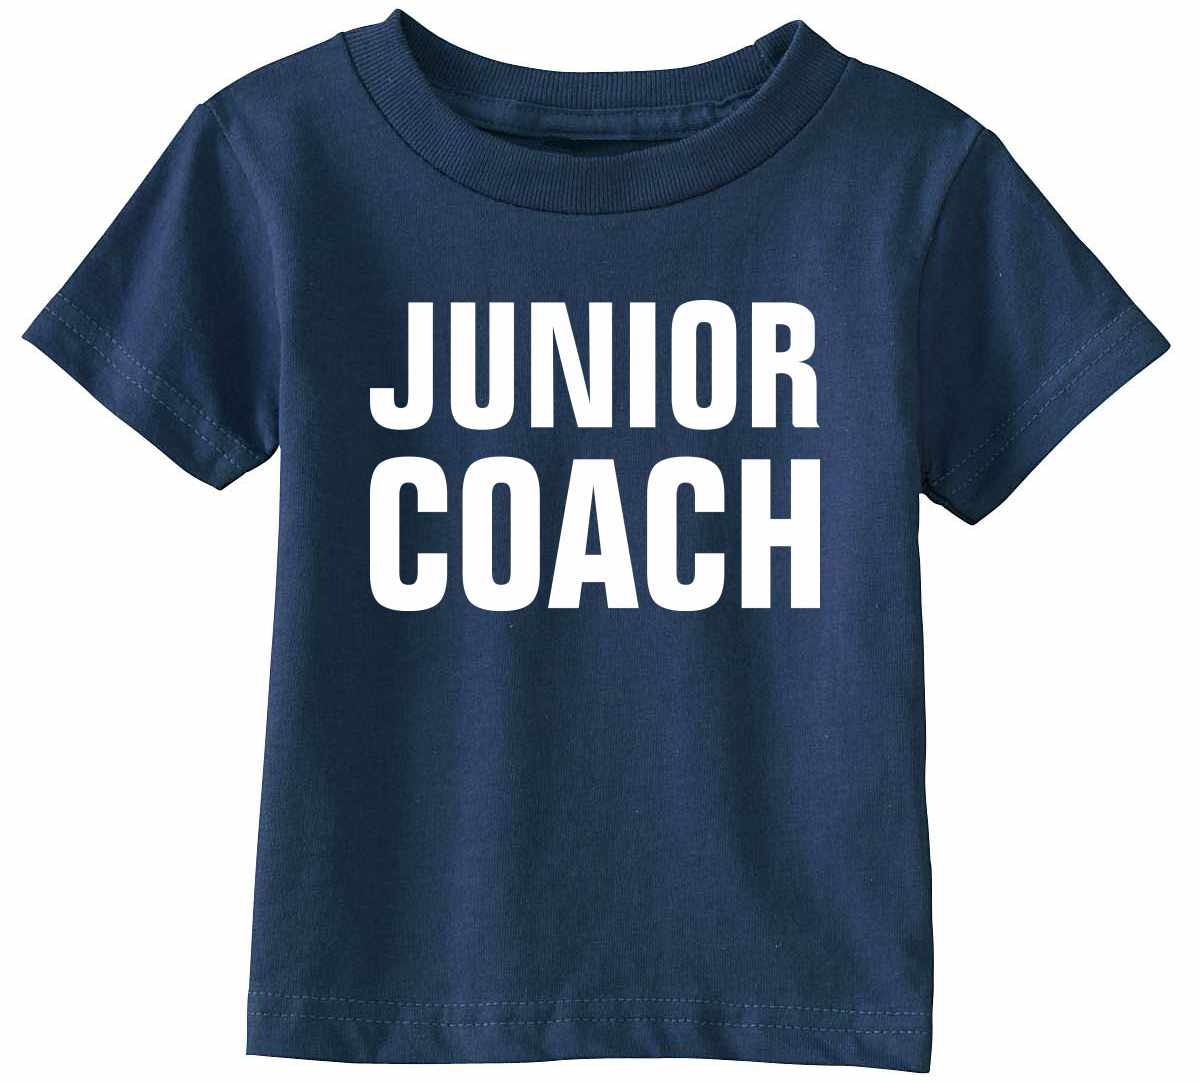 Junior Coach on Infant-Toddler T-Shirt